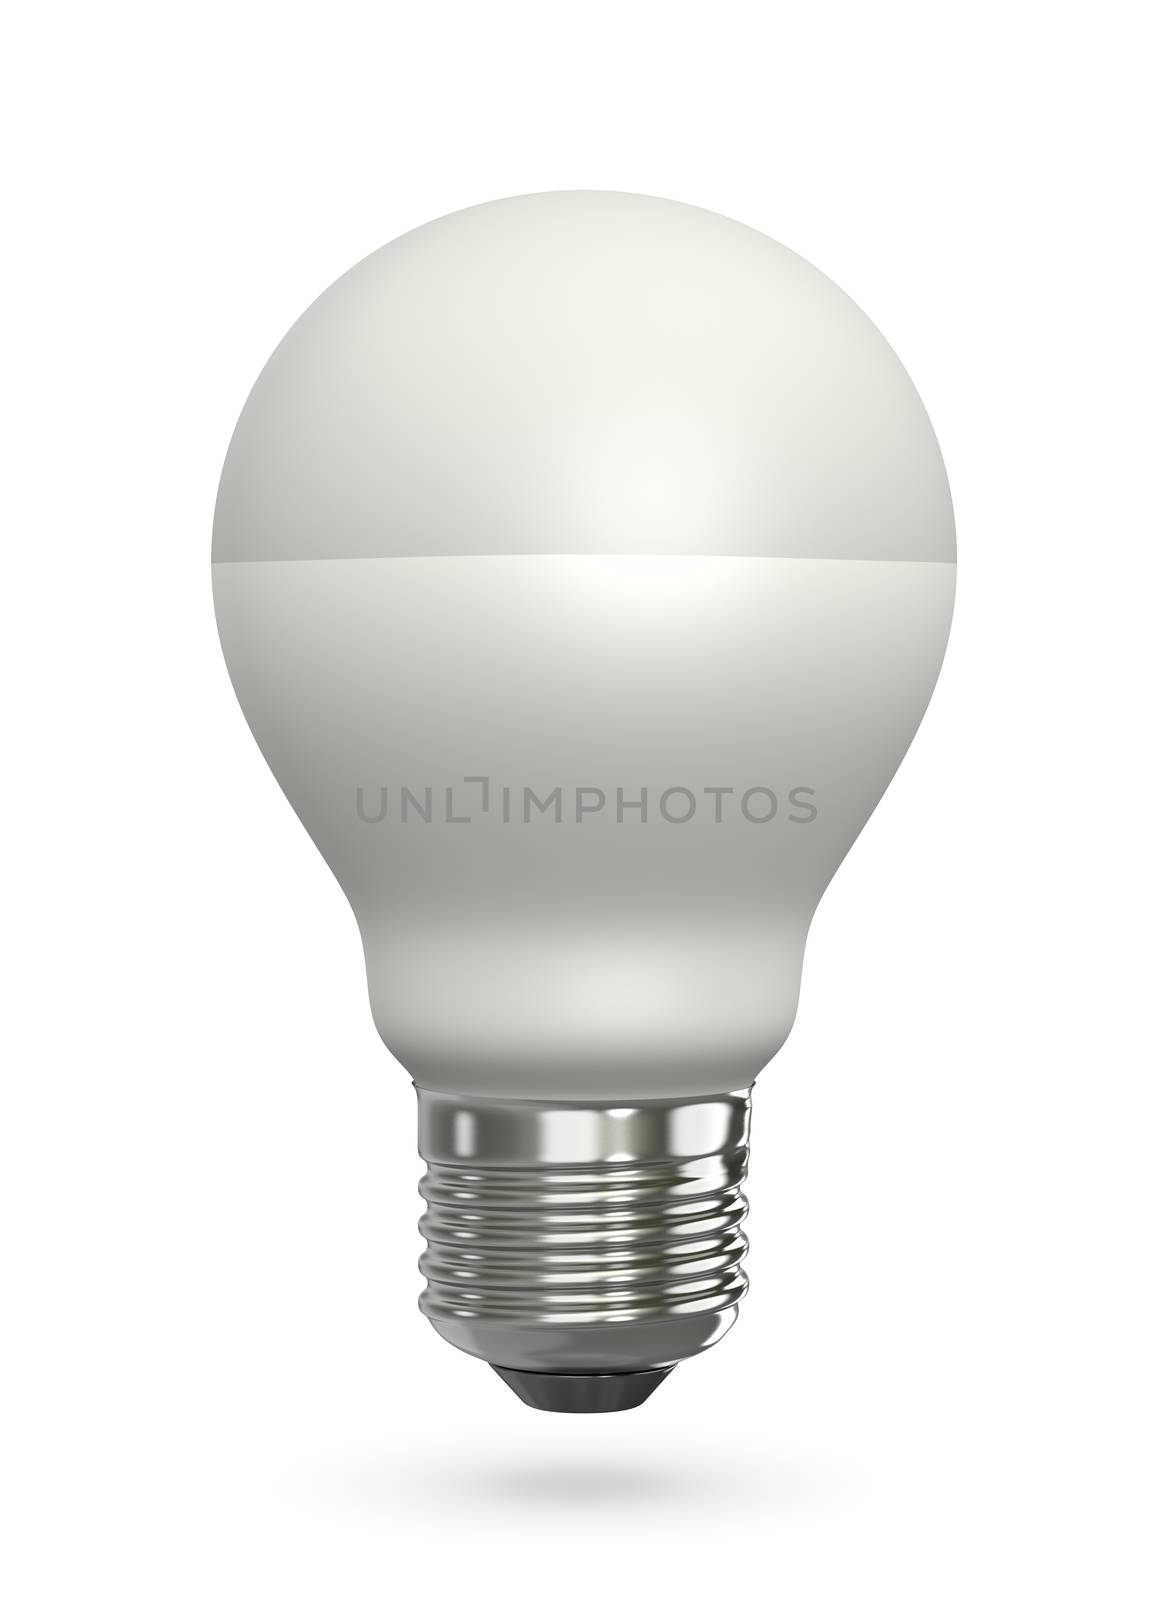 LED Lamp by make